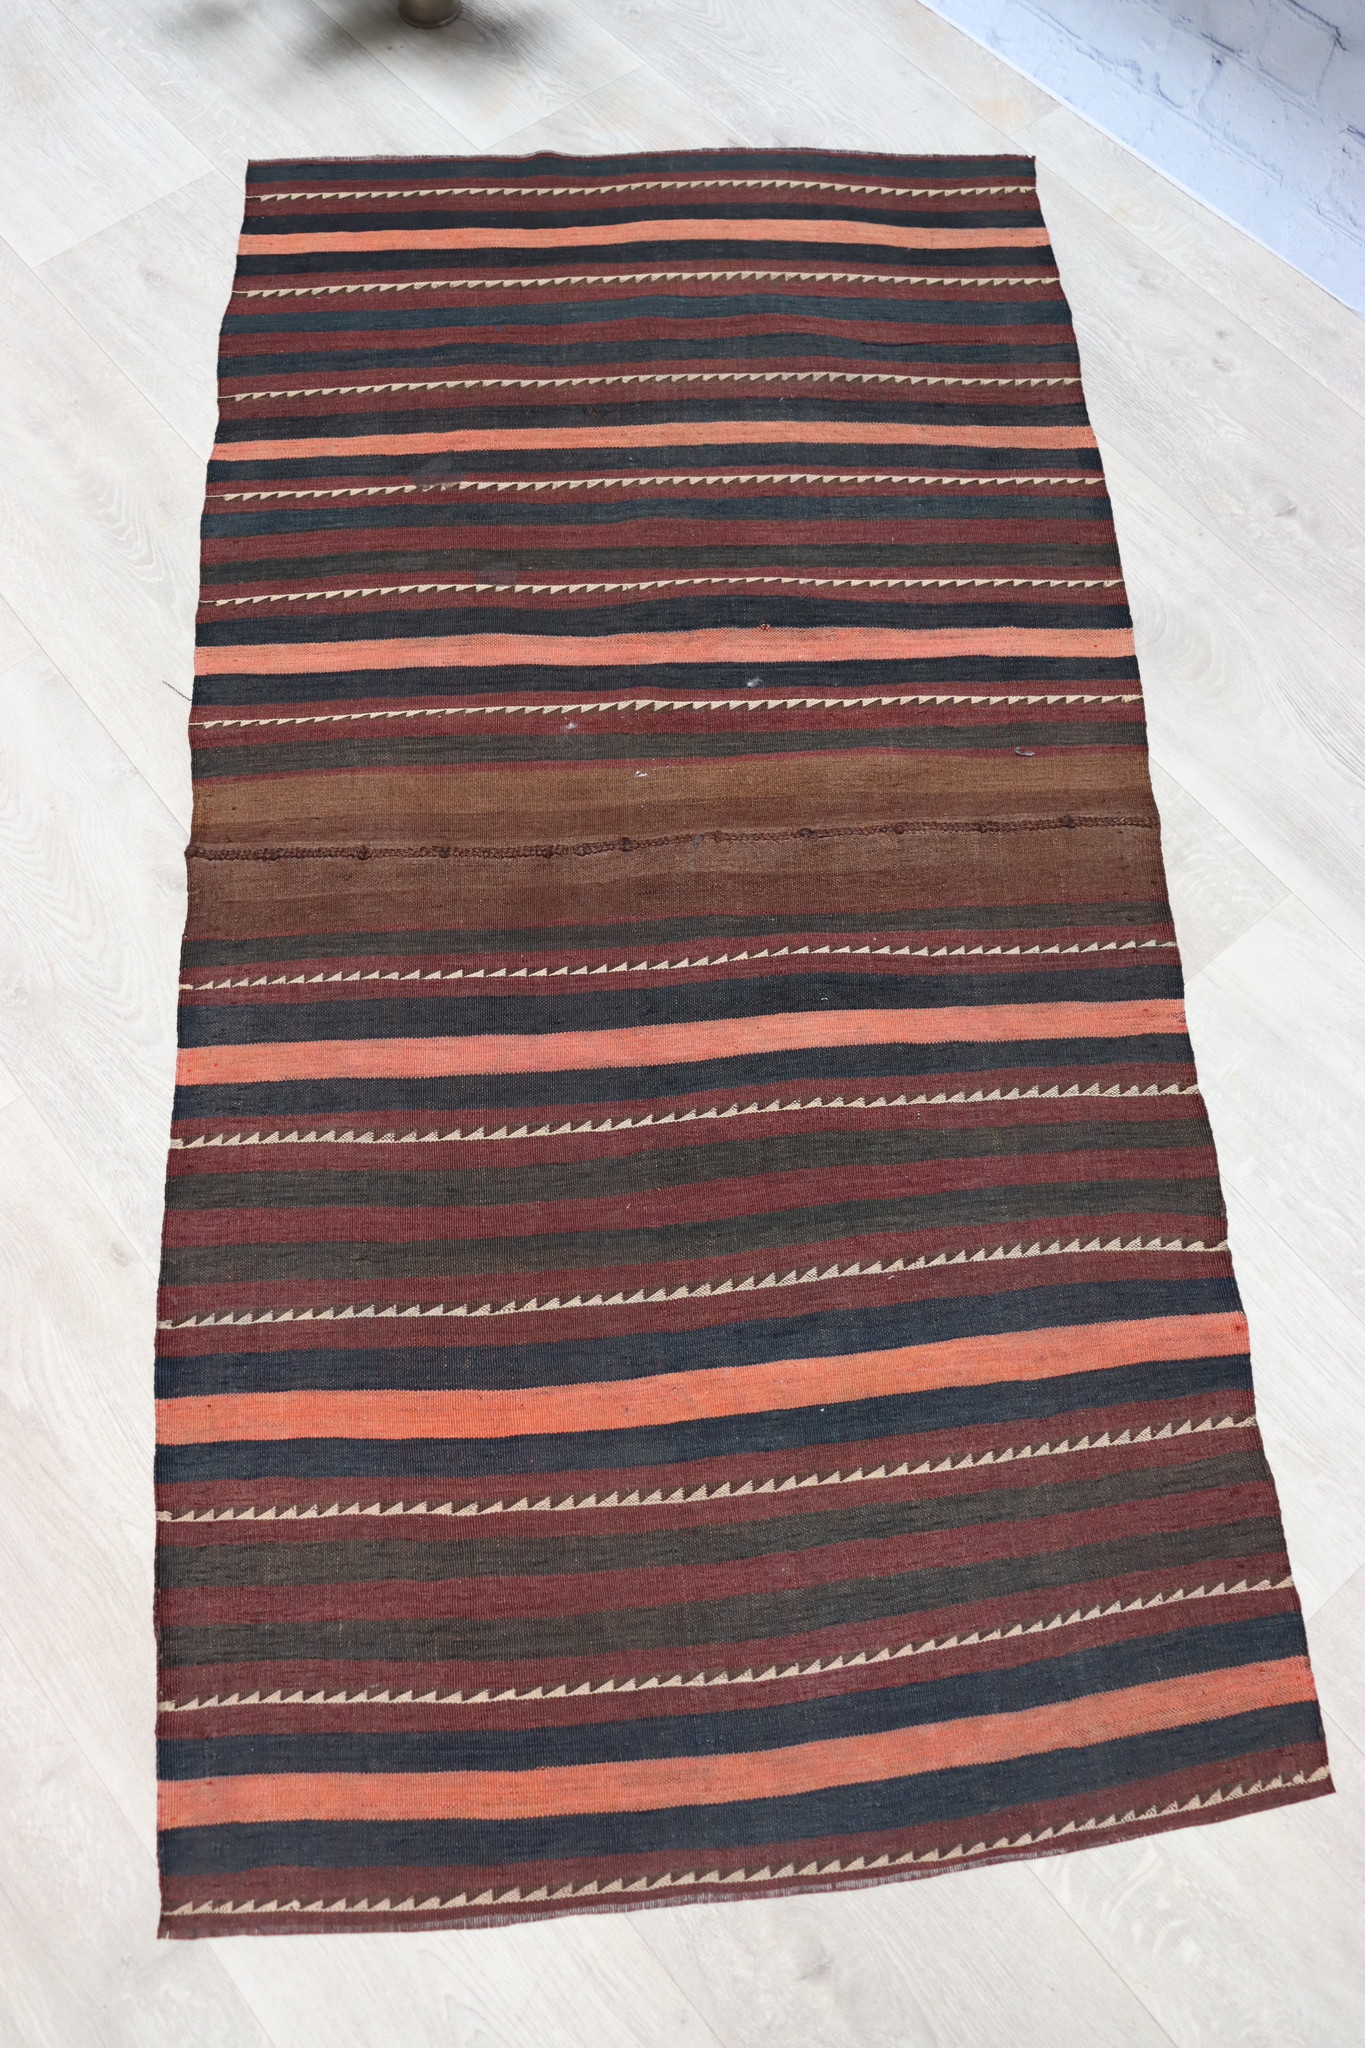 144x74 cmantique tribal Nomadic Baluch nomads belotsch sumakh Balouch Vintage Kilim Tataren rug from Afghanistan No.30